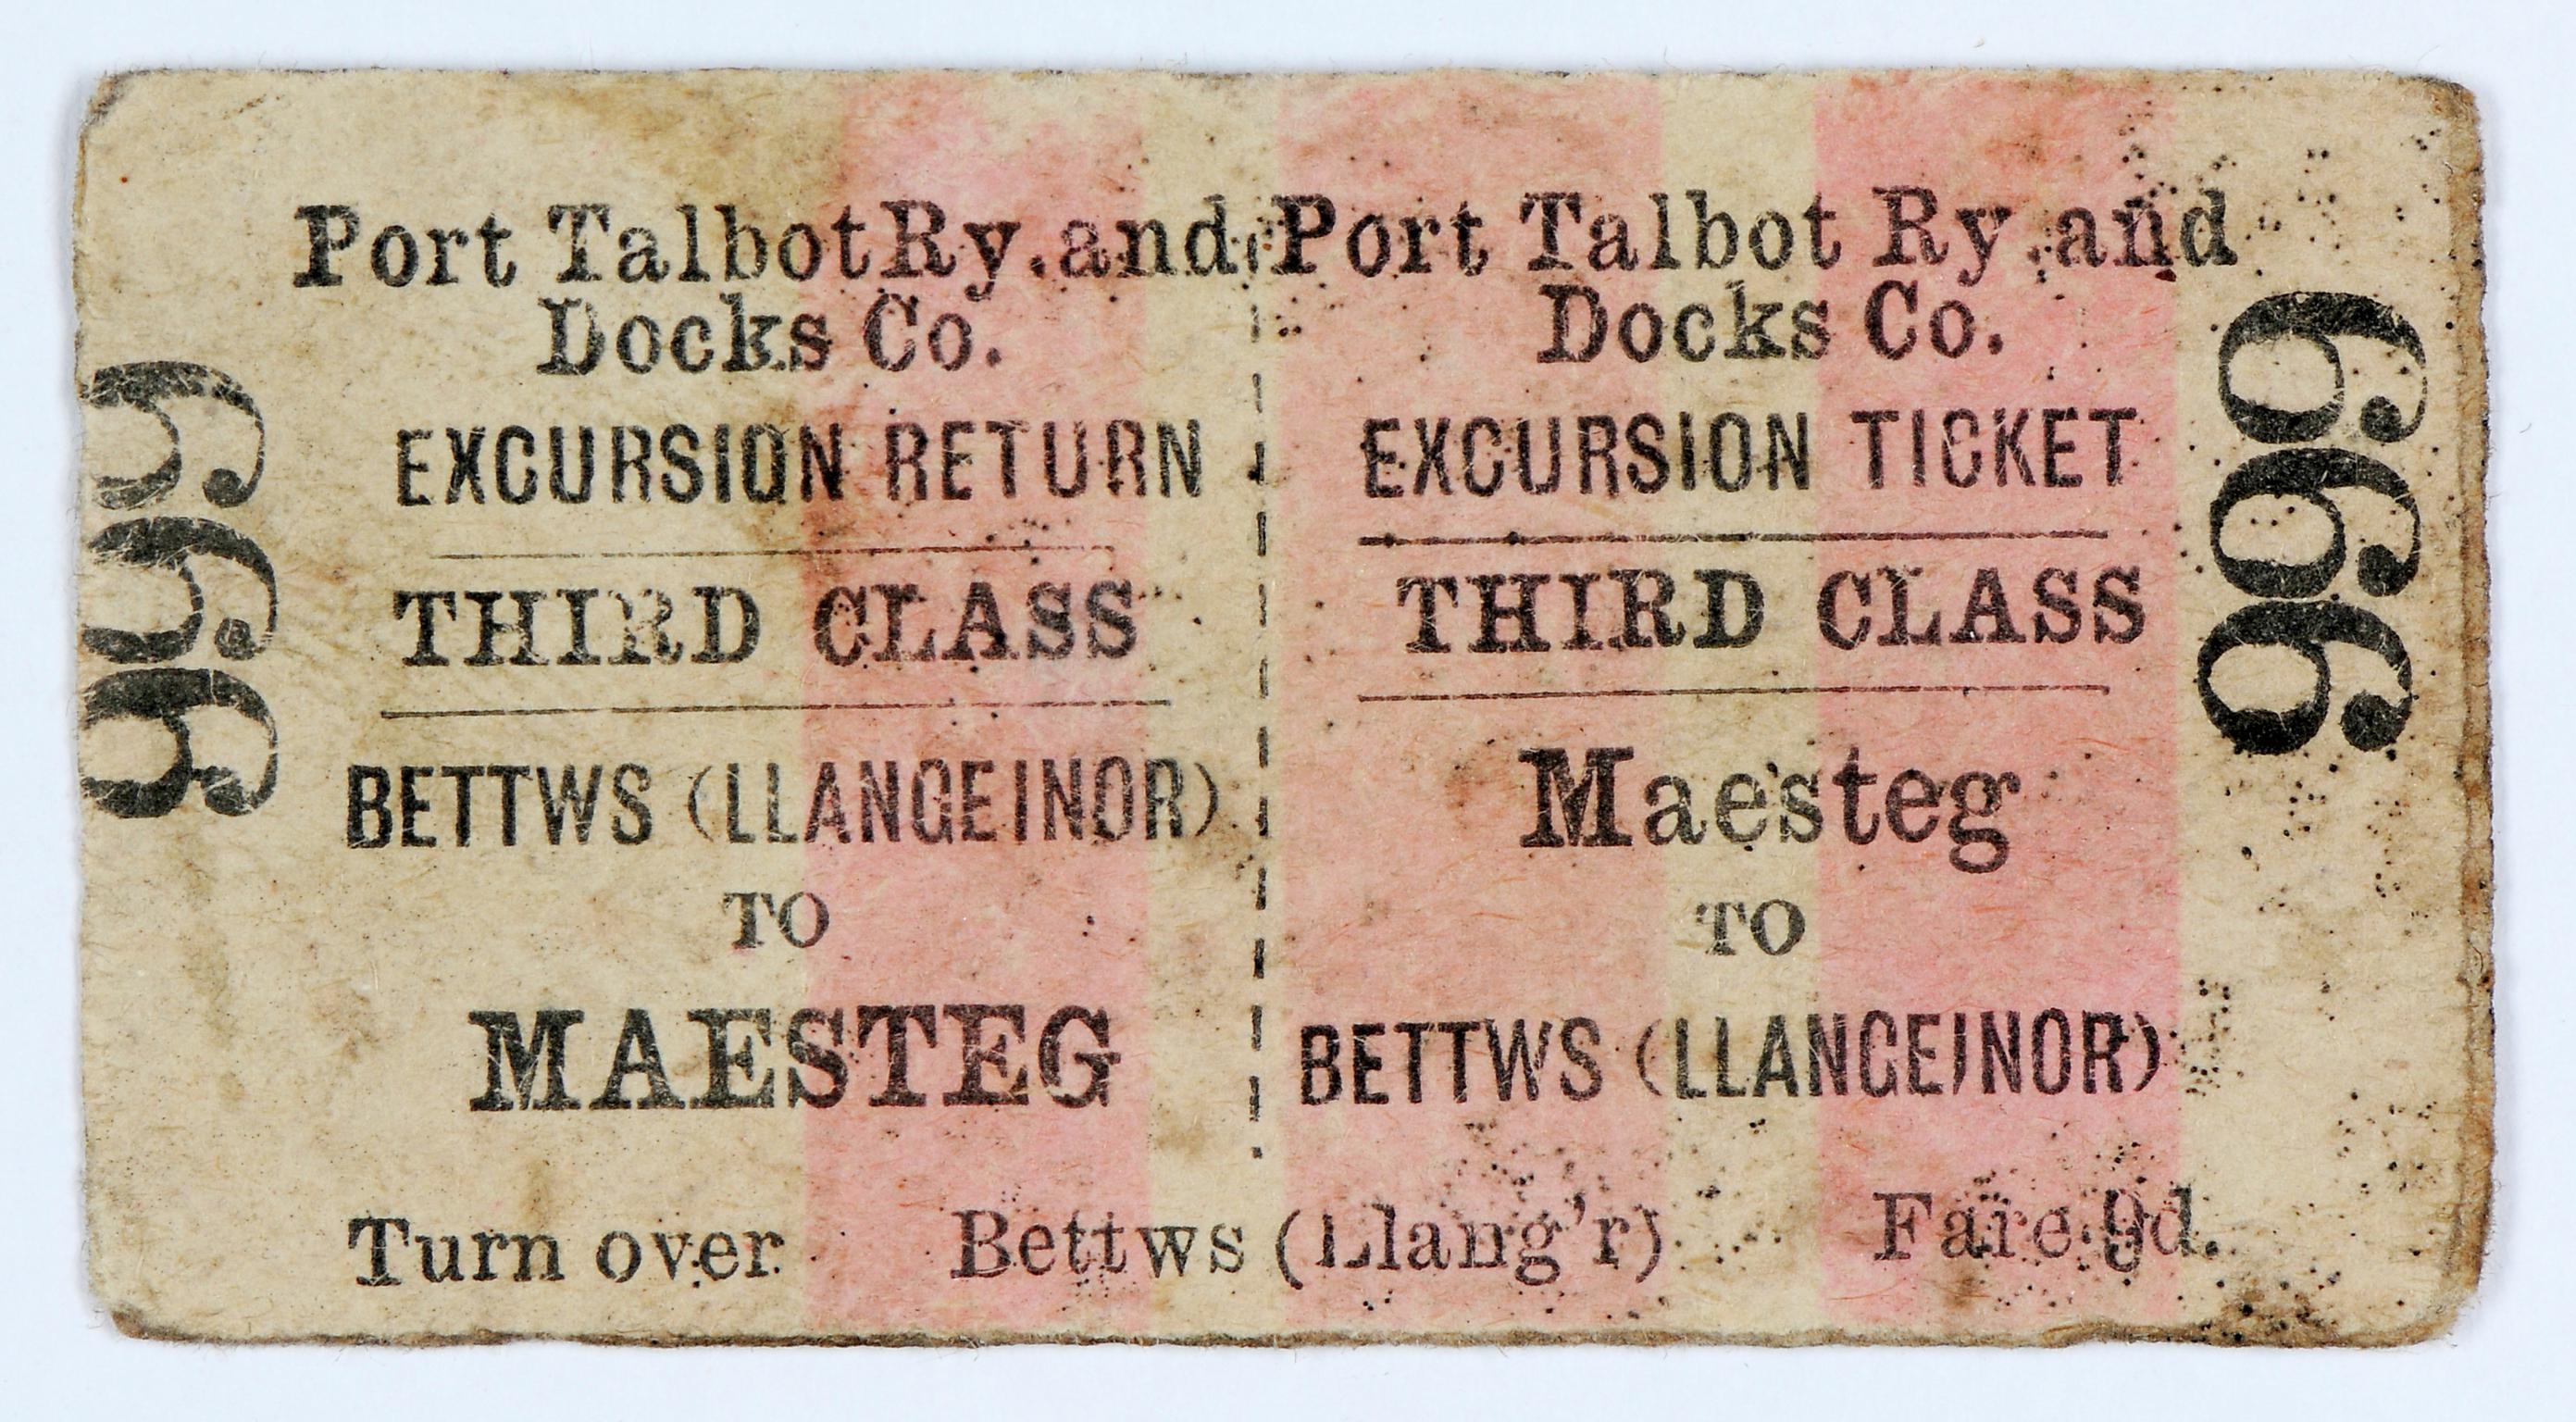 Port Talbot Railway & Docks Co., ticket